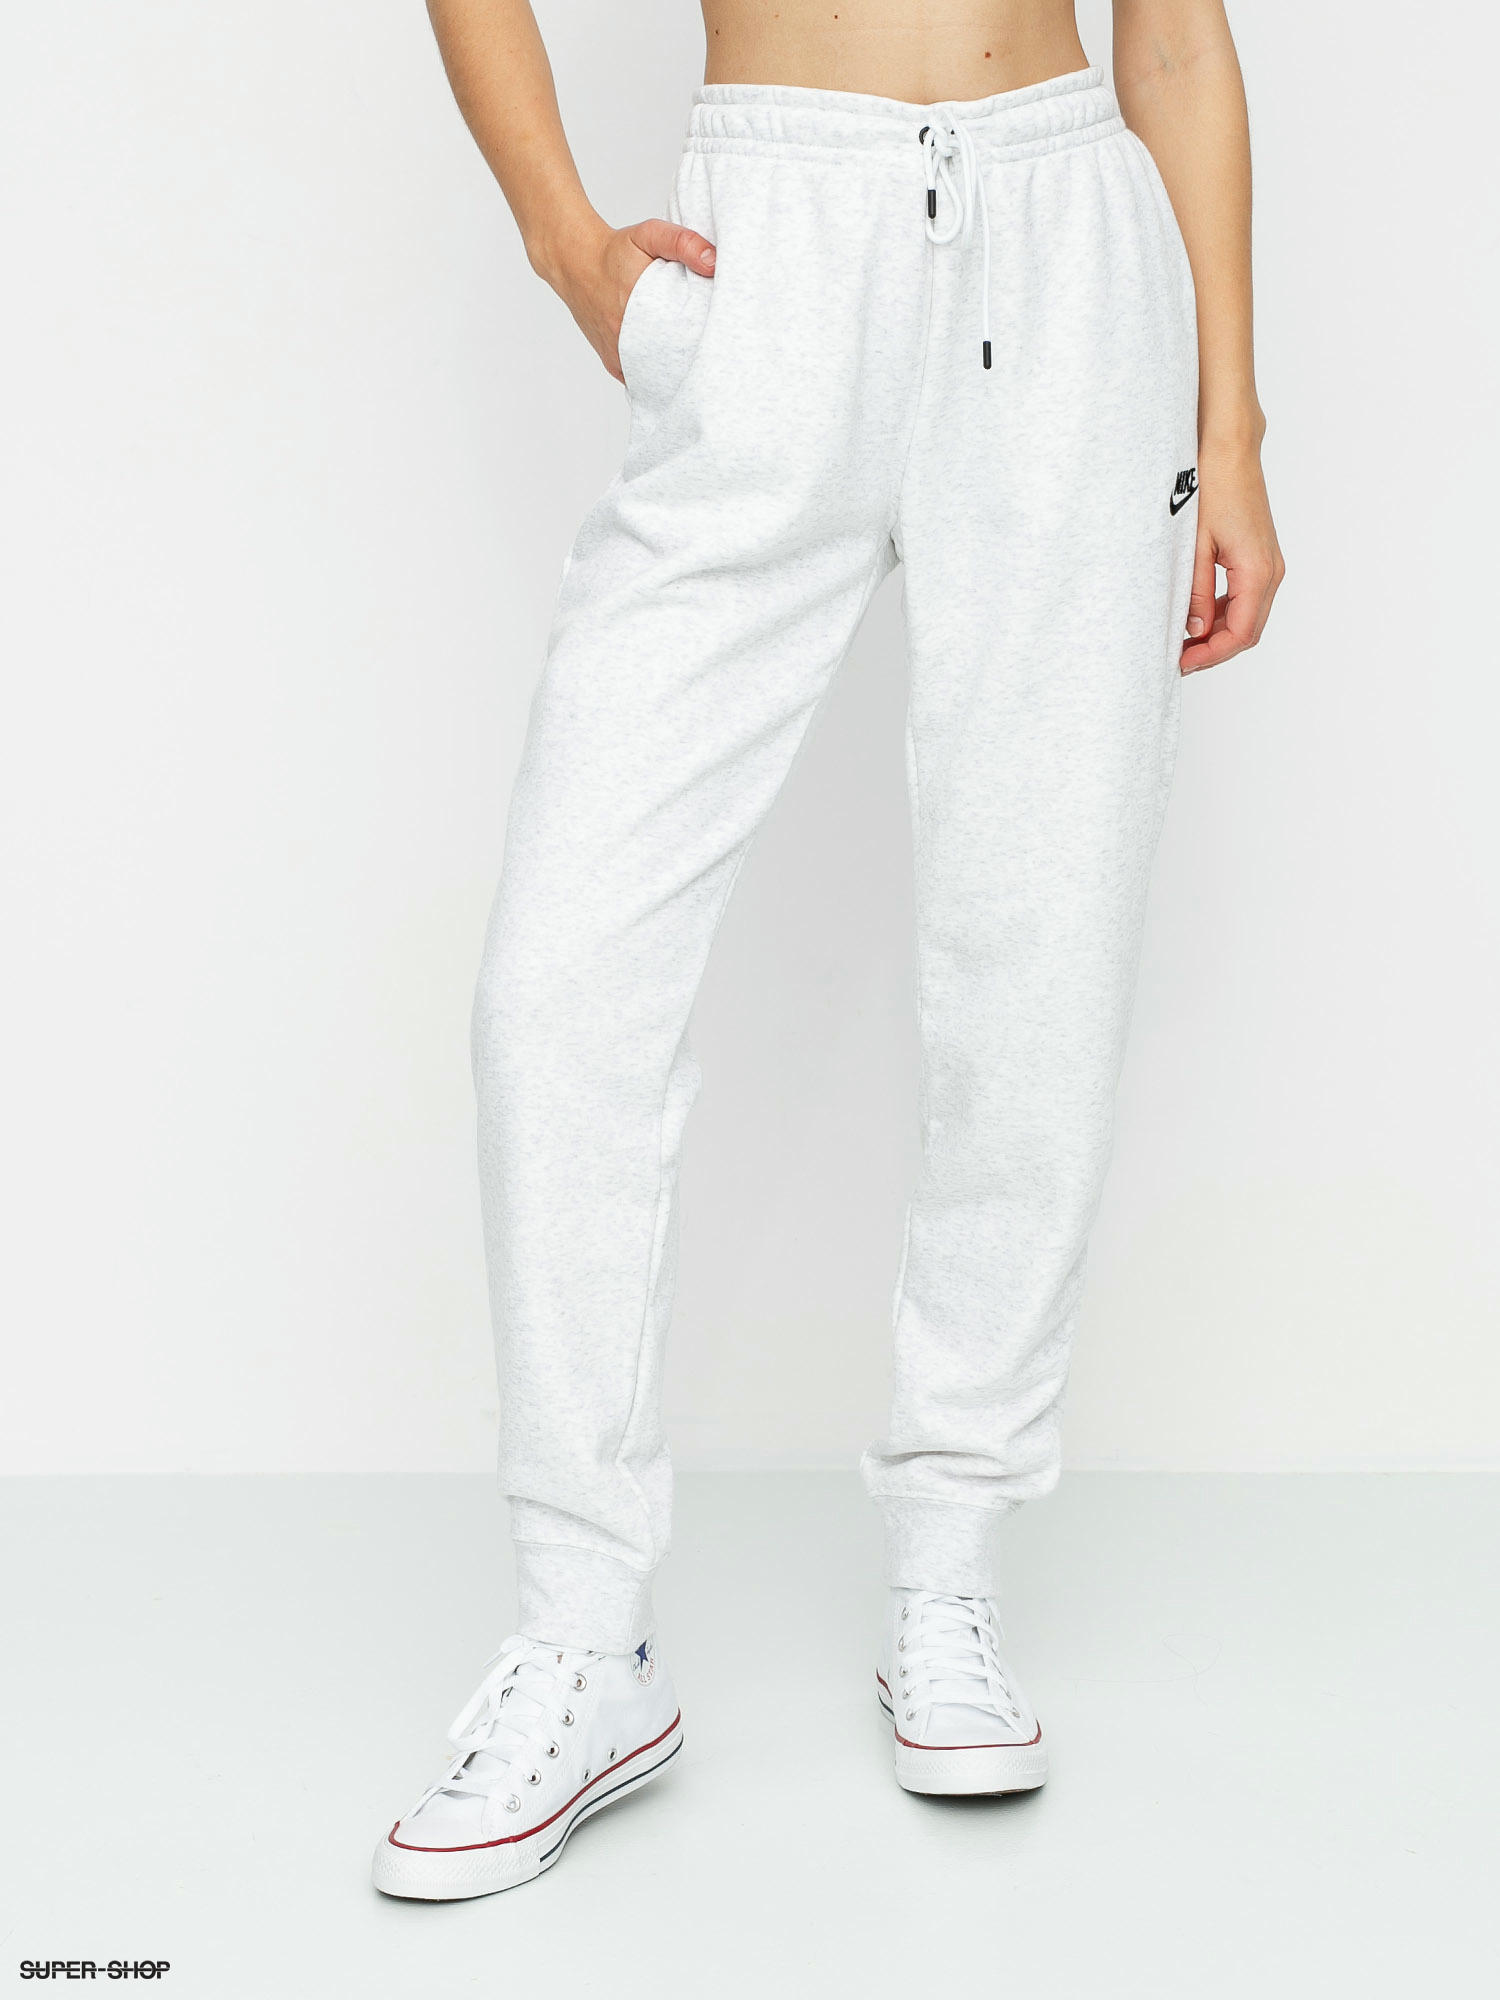 Sportswear Essential Collection Fleece Pants Size XS BNWT - AirRobe